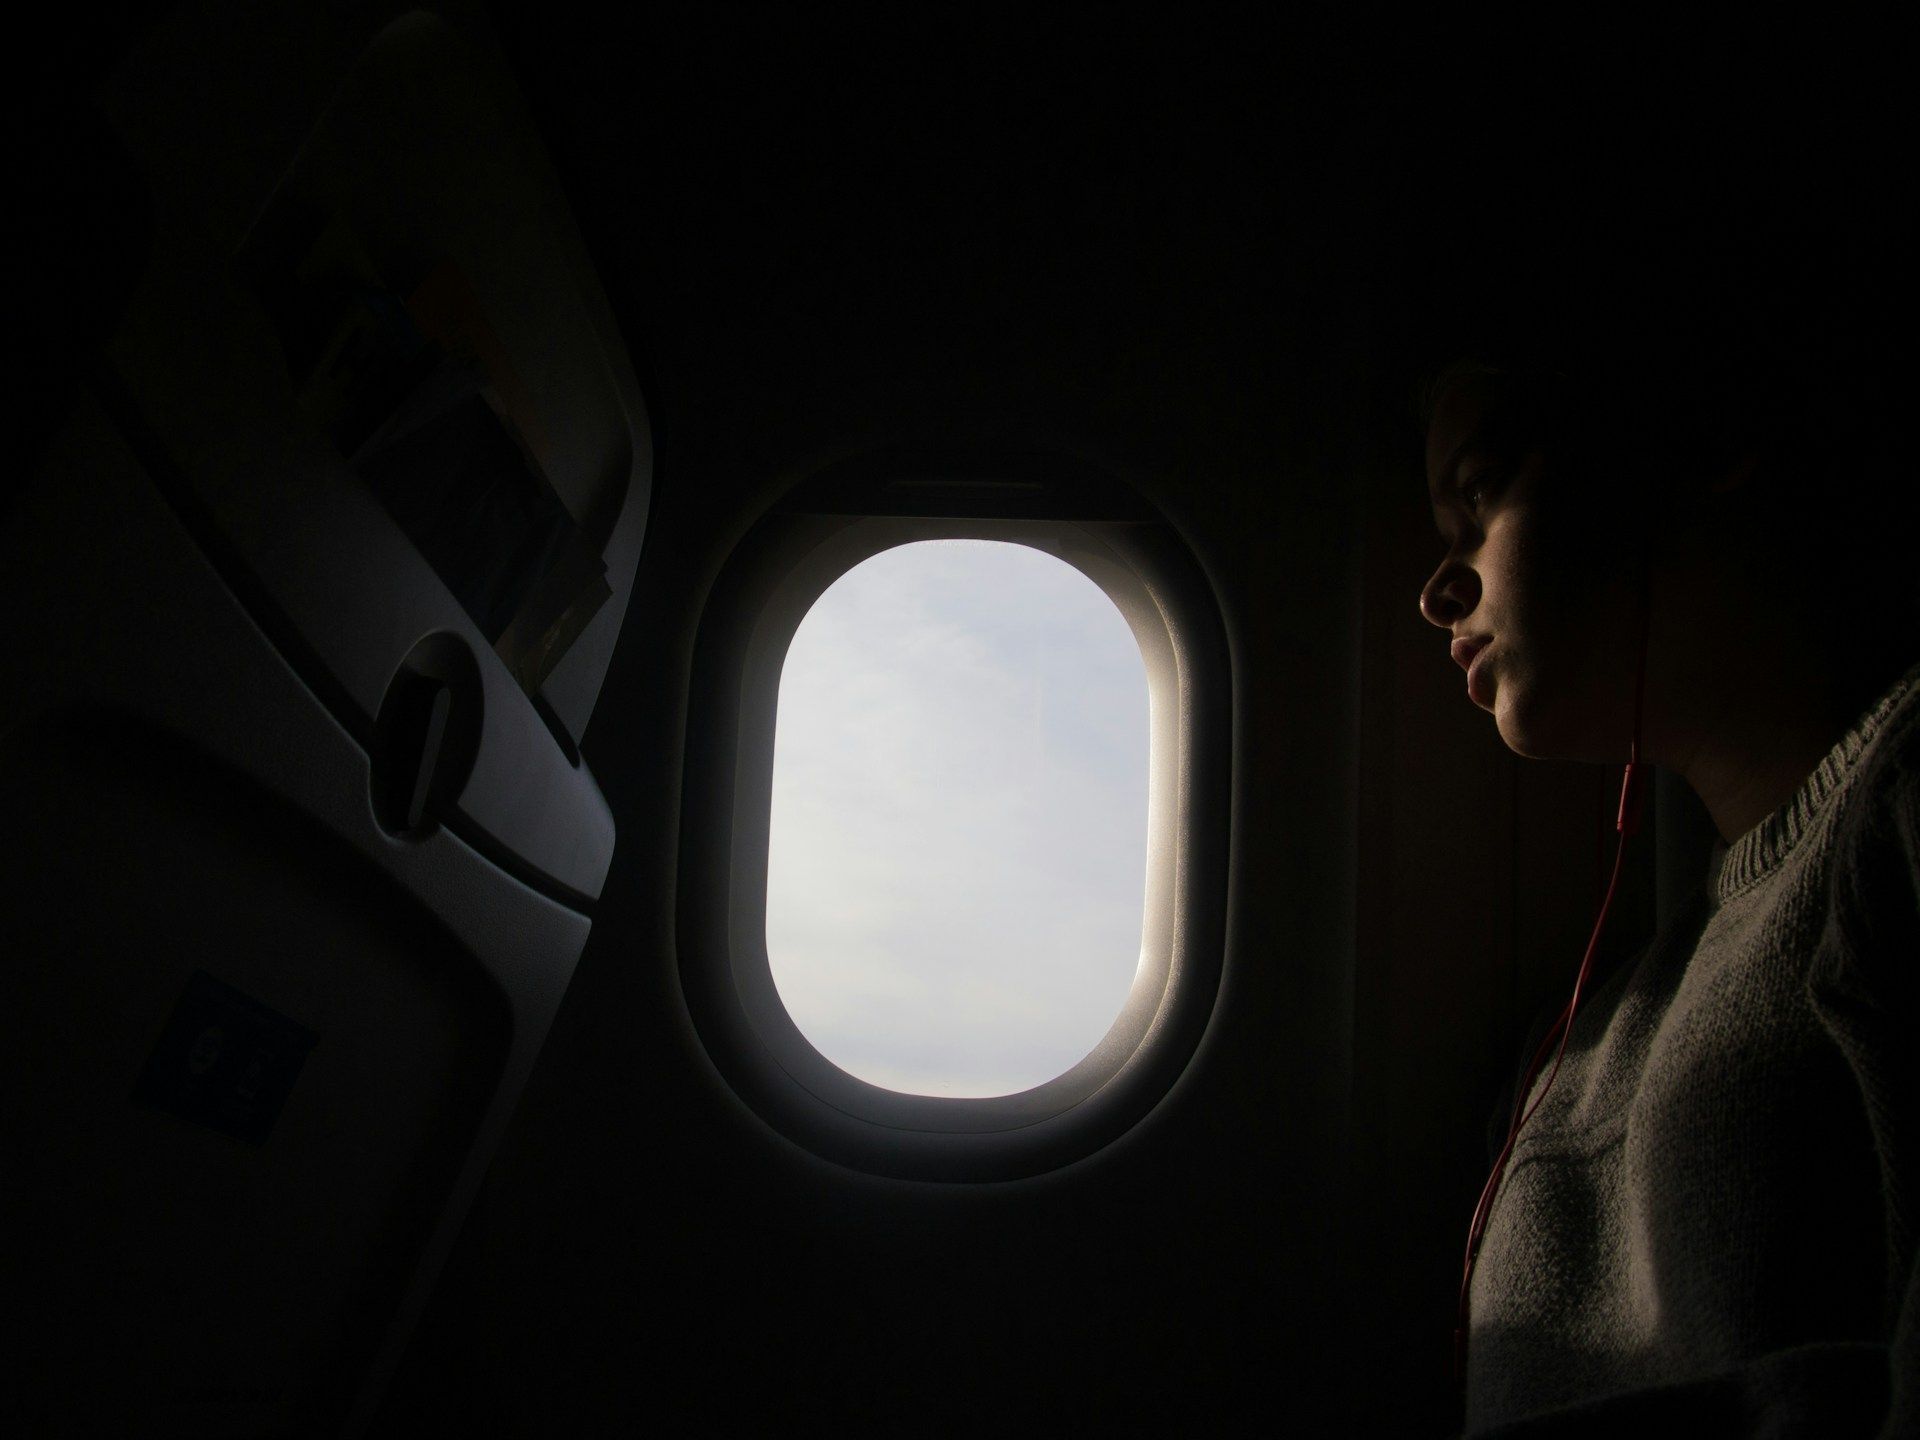 on a plane